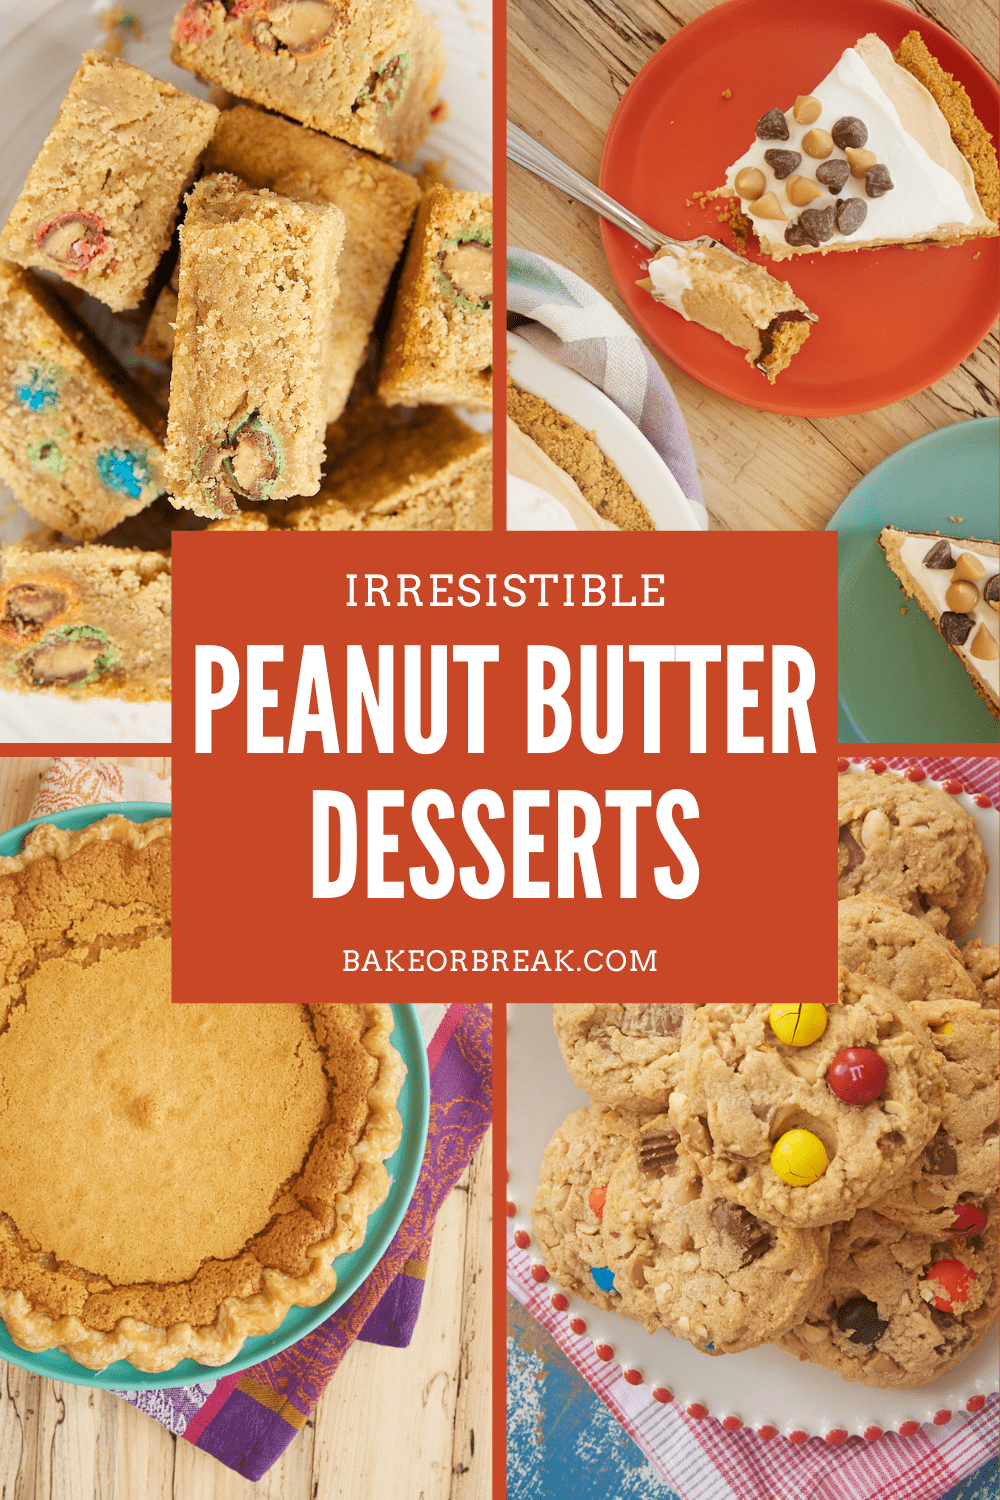 Irresistible Peanut Butter Desserts bakeorbreak.com